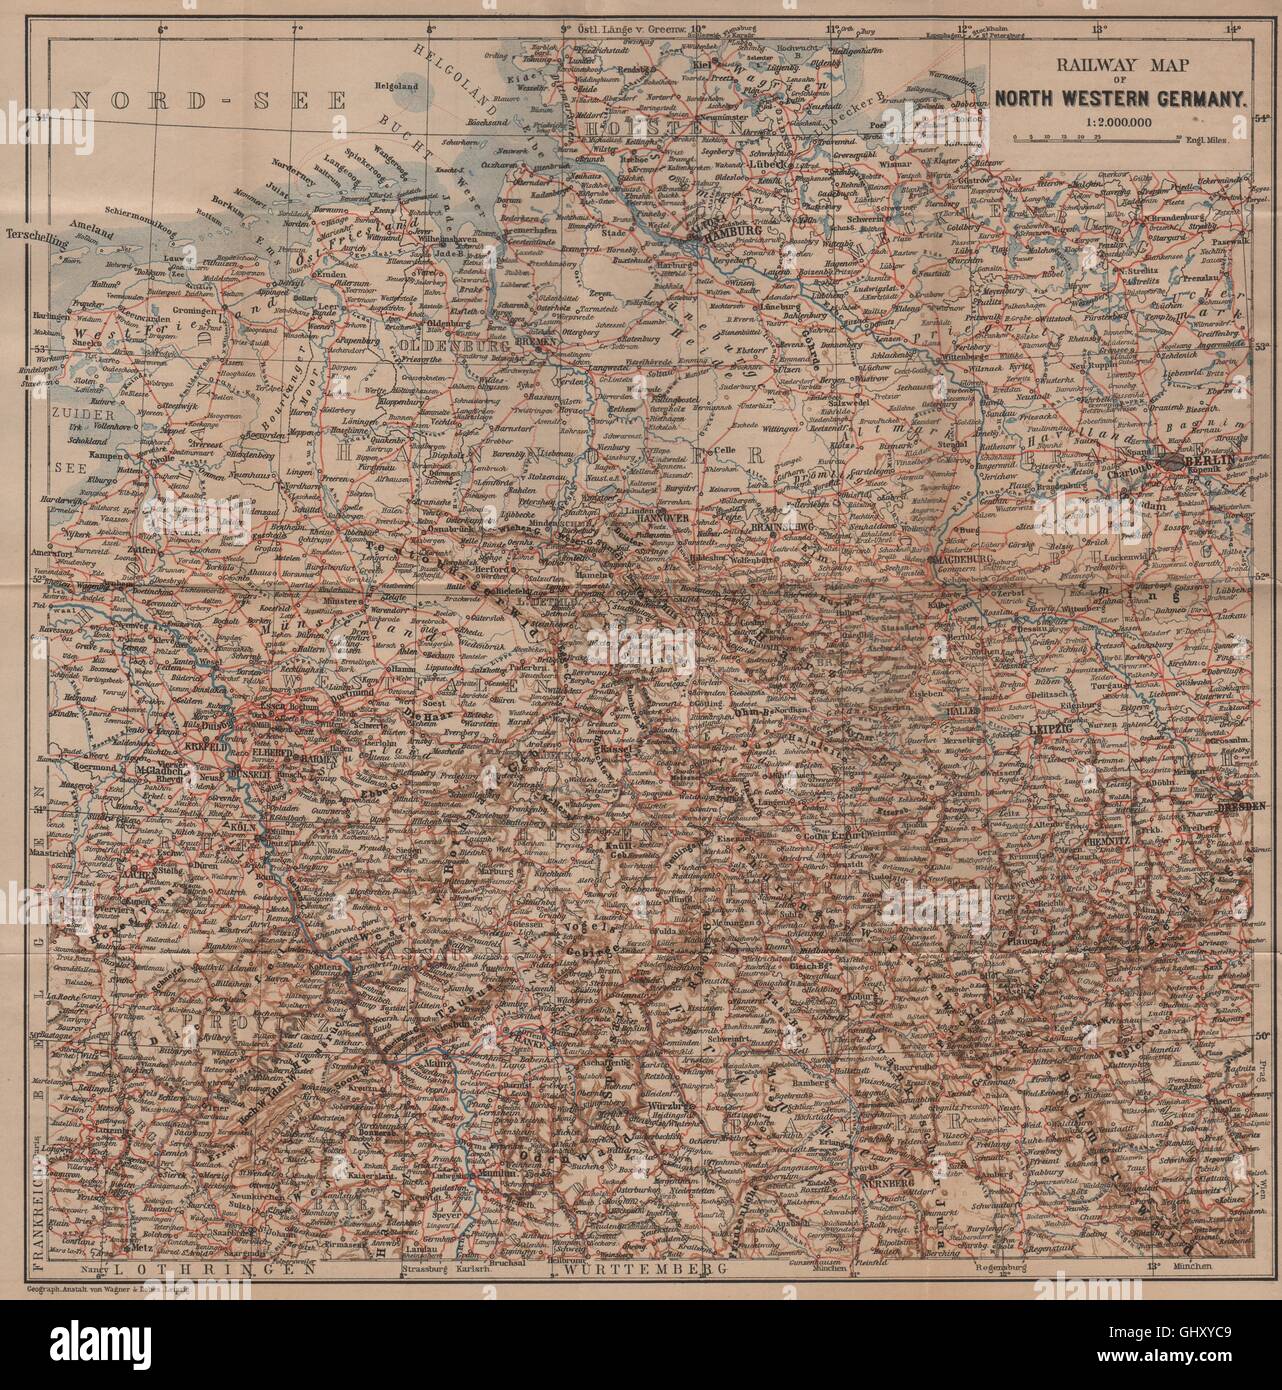 Germania nord-occidentale delle ferrovie. Nord Deutschland eisenbahnen karte, 1900 mappa vecchia Foto Stock